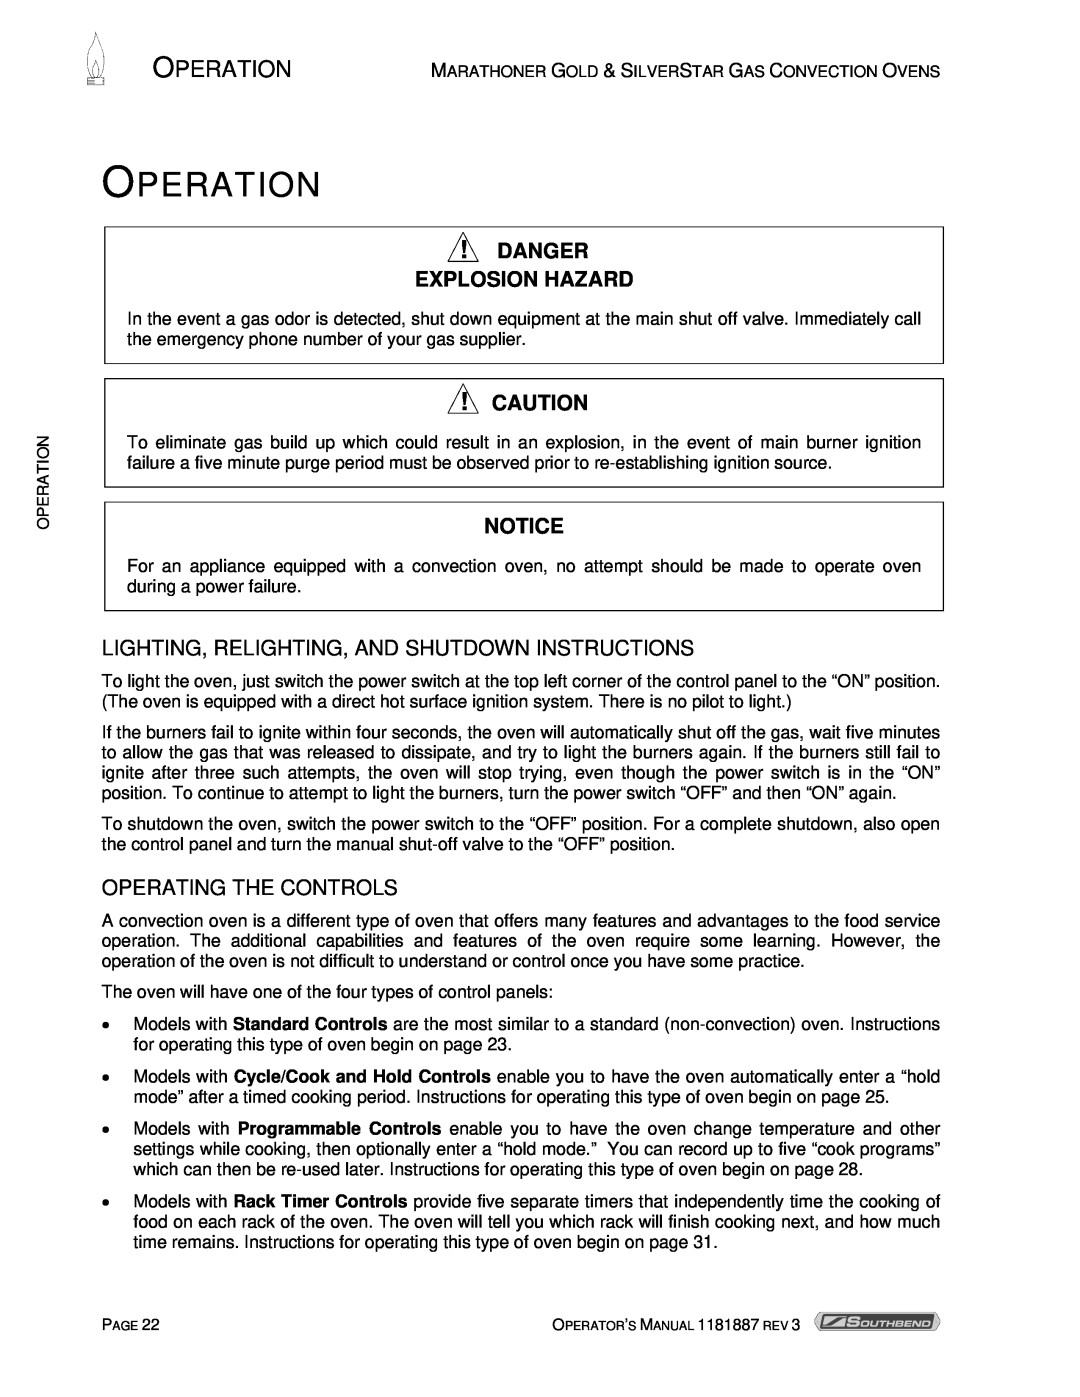 Southbend Marathoner manual Operation, Danger Explosion Hazard, Lighting, Relighting, And Shutdown Instructions 